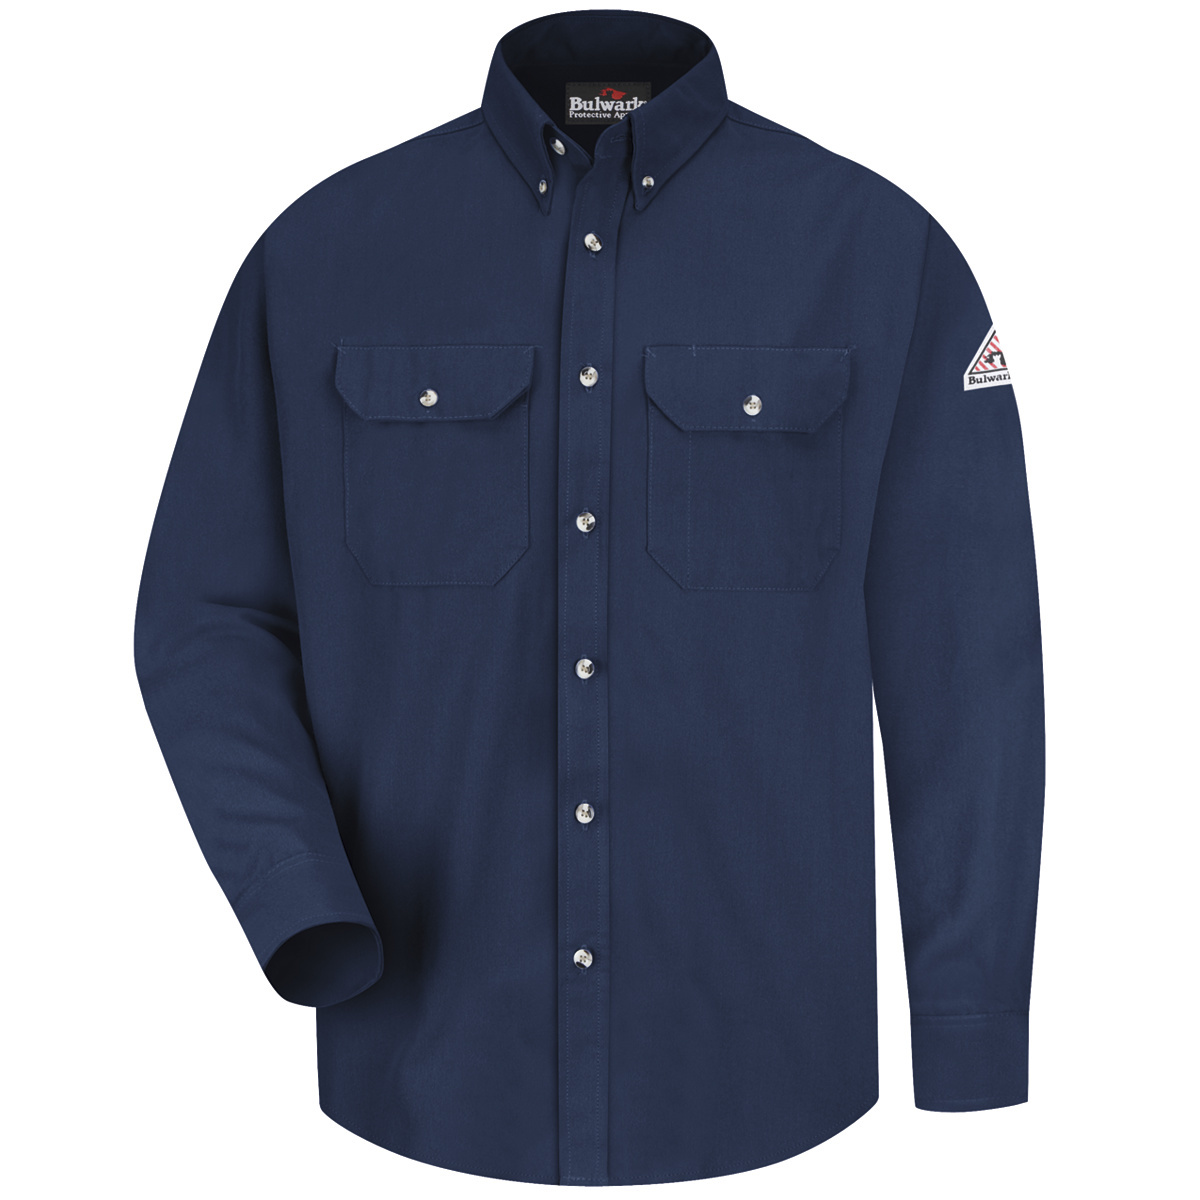 Bulwark® Large Tall Navy Blue Modacrylic/Lyocell/Aramid Flame Resistant Dress Uniform Shirt With Button Front Closure